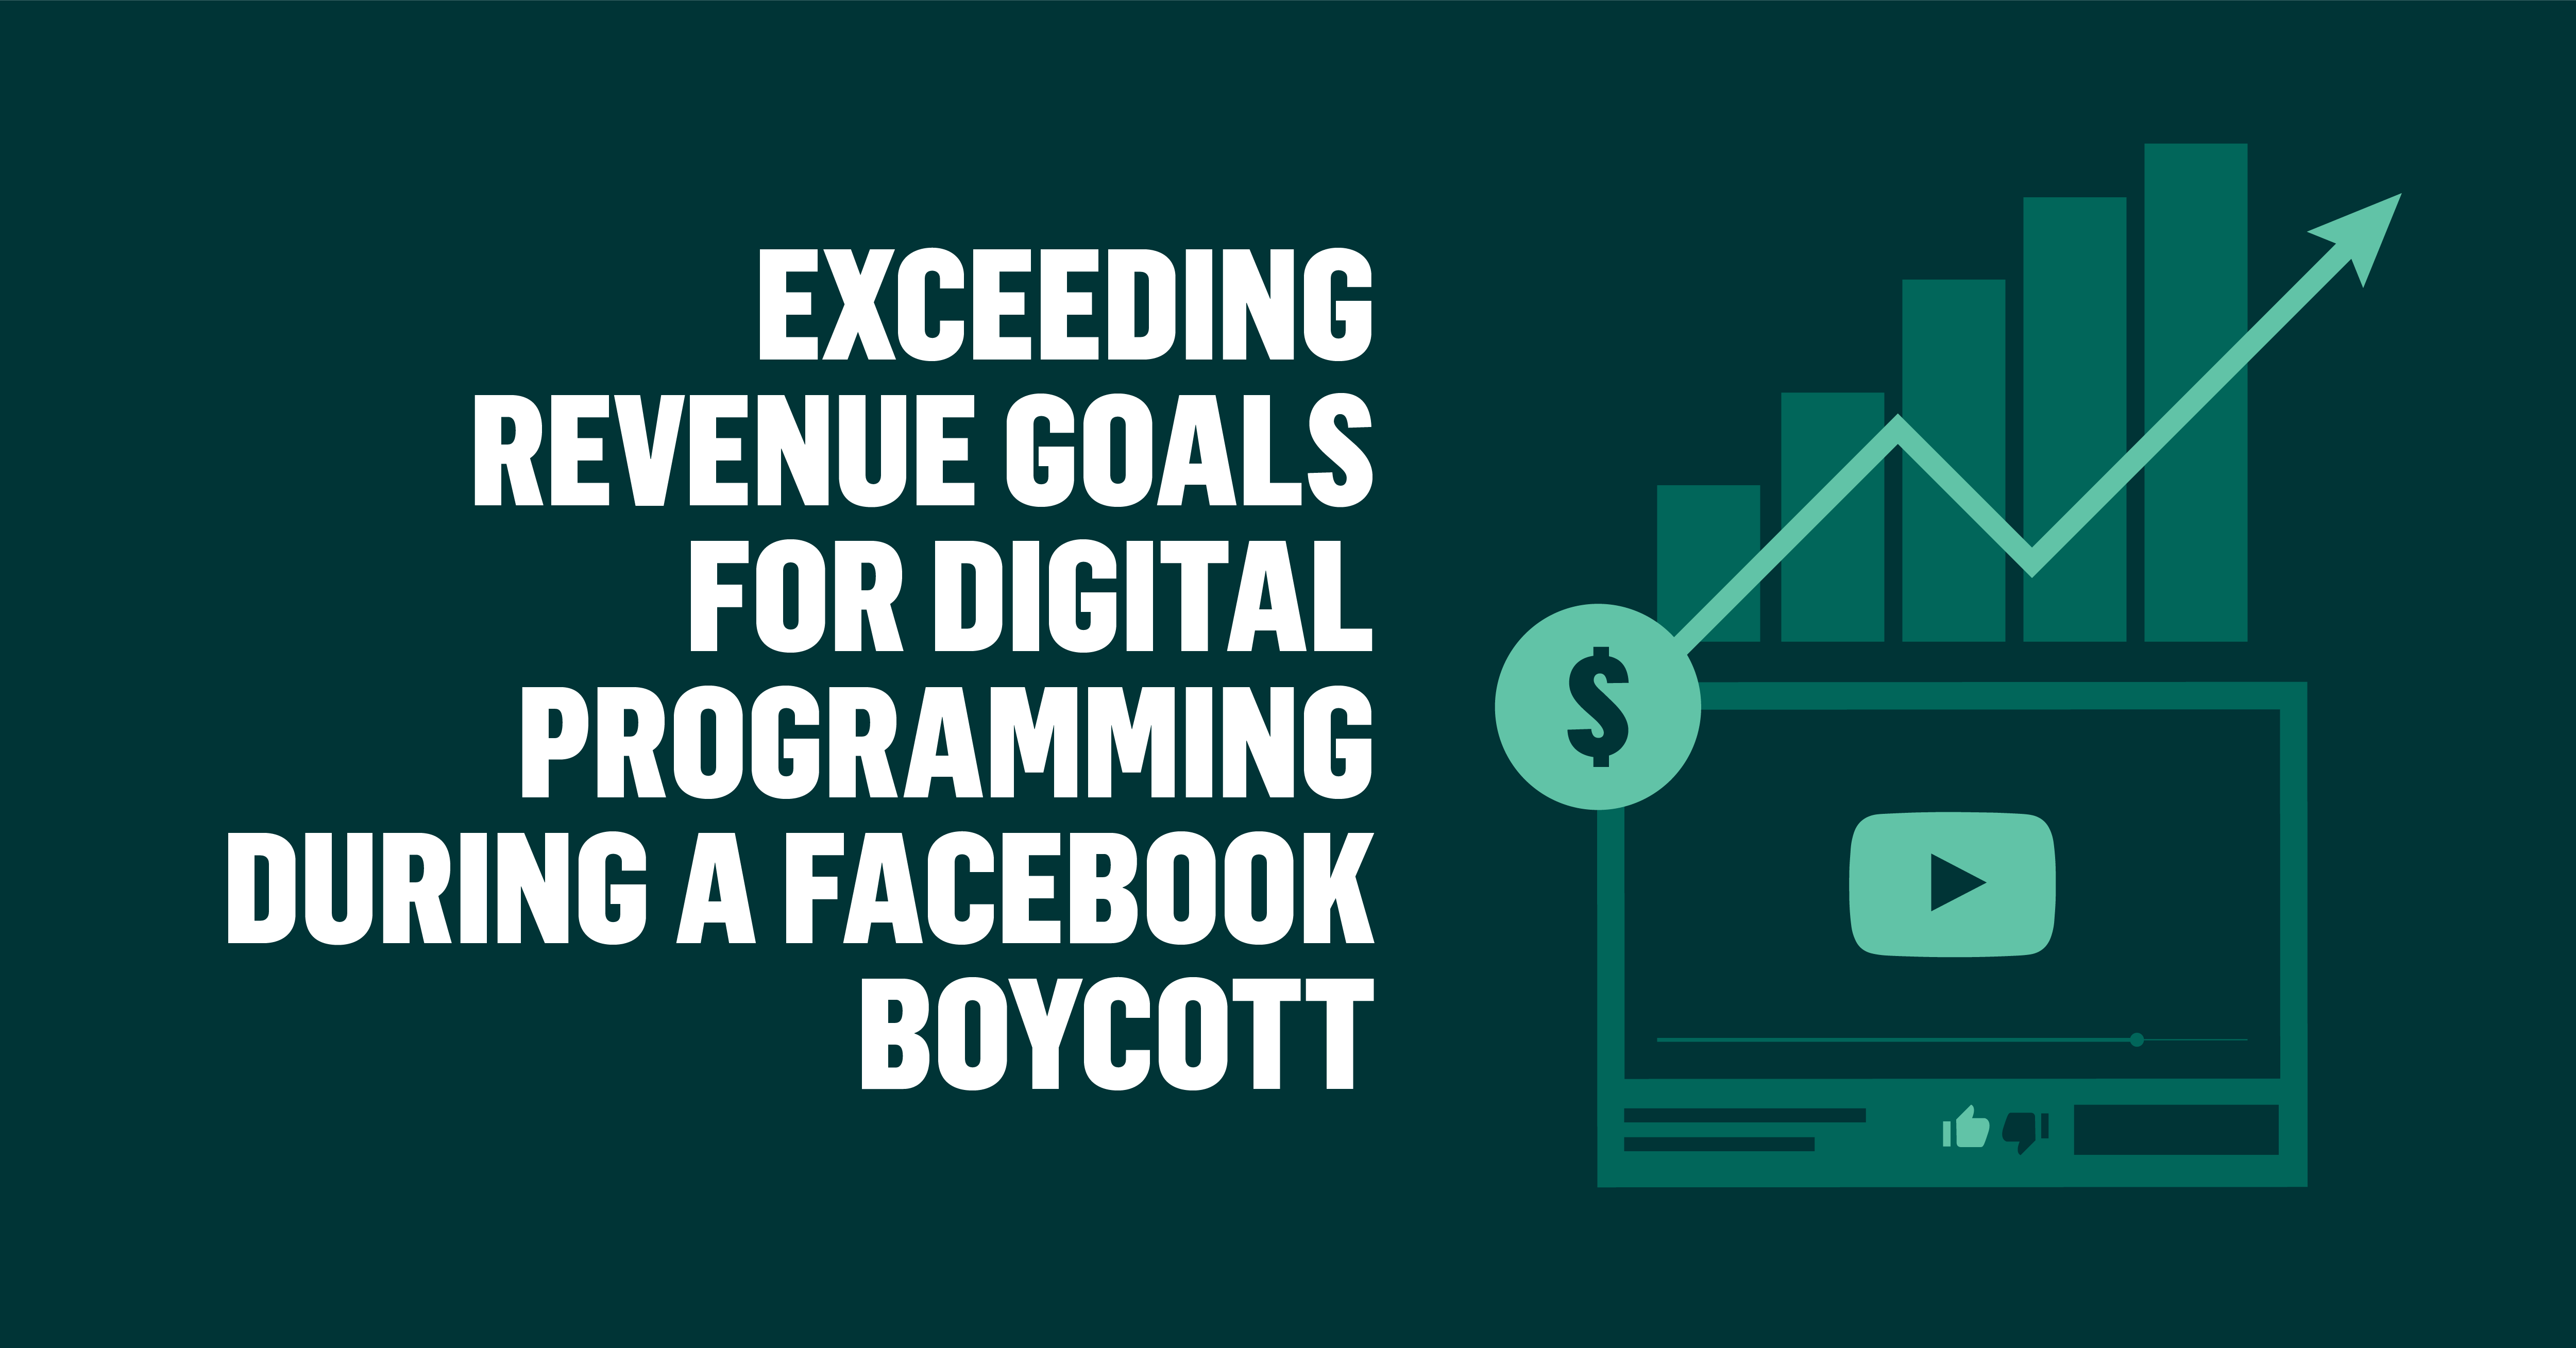 20-08 Exceeding Revenue Goals for Digital Programming During a Facebook Boycott-04